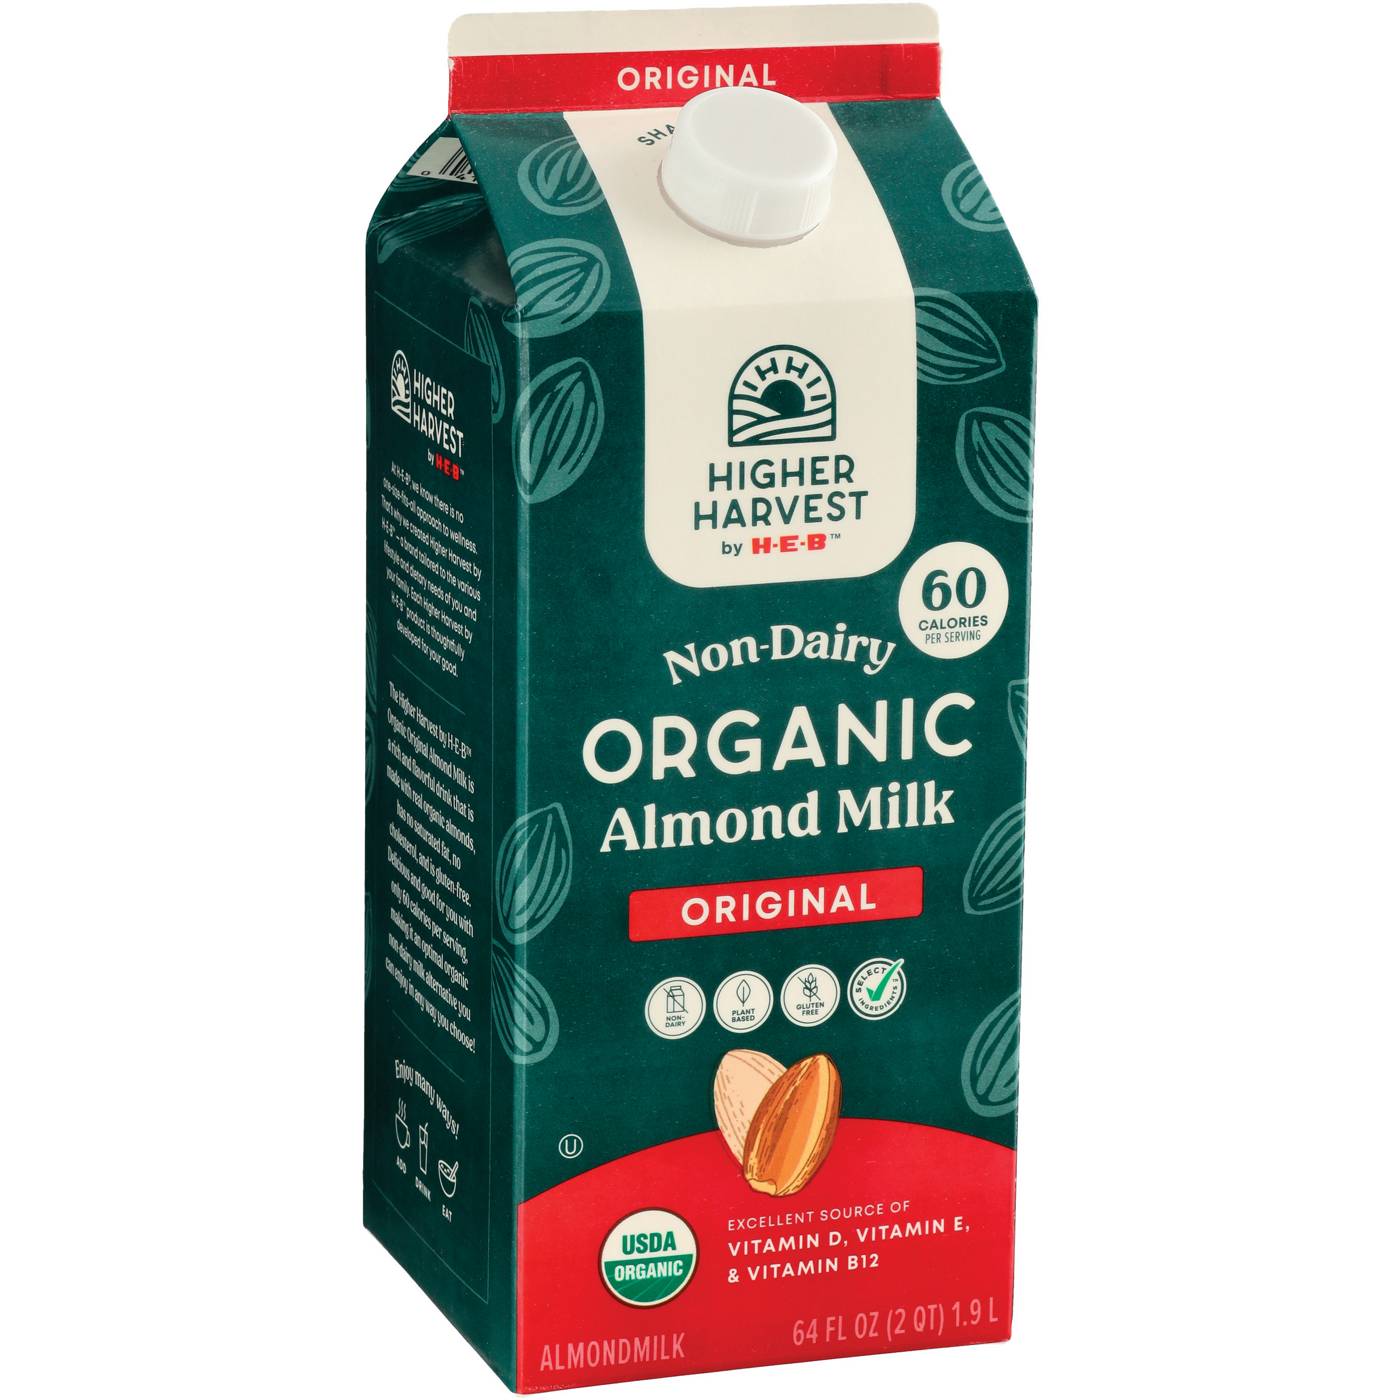 Higher Harvest by H-E-B Organic Non-Dairy Almond Milk – Original; image 2 of 2